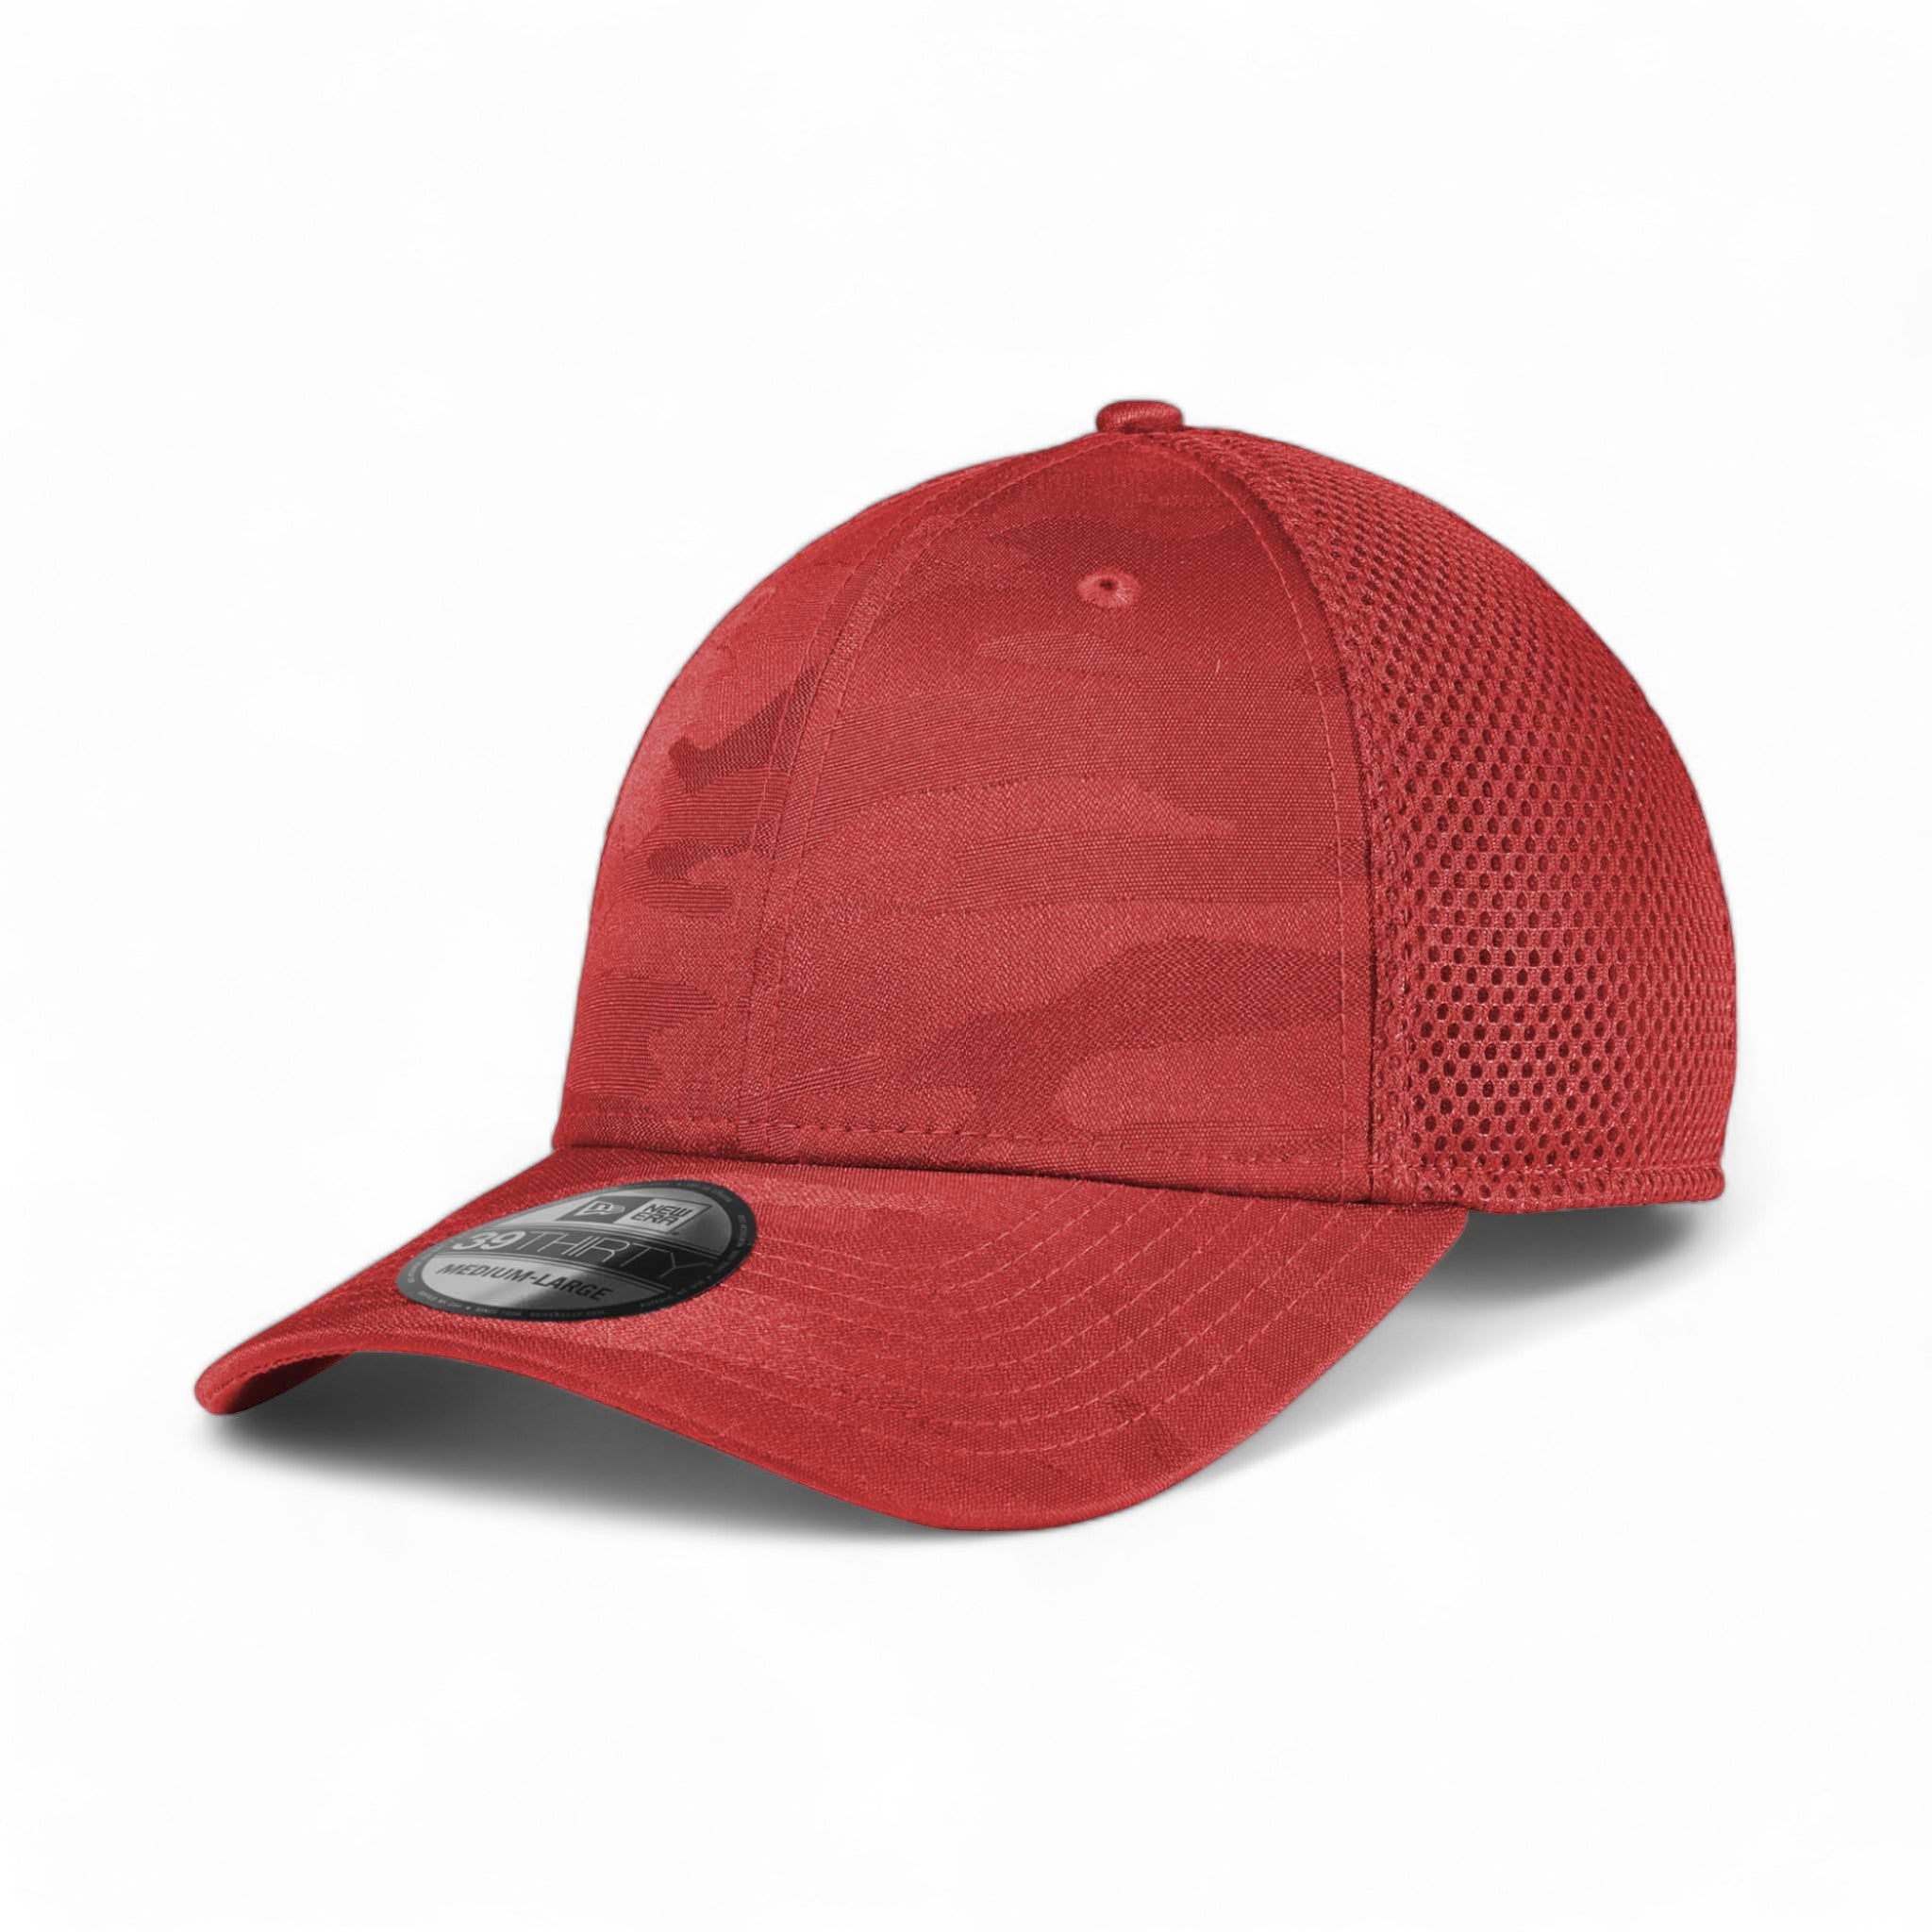 Side view of New Era NE1091 custom hat in red camo